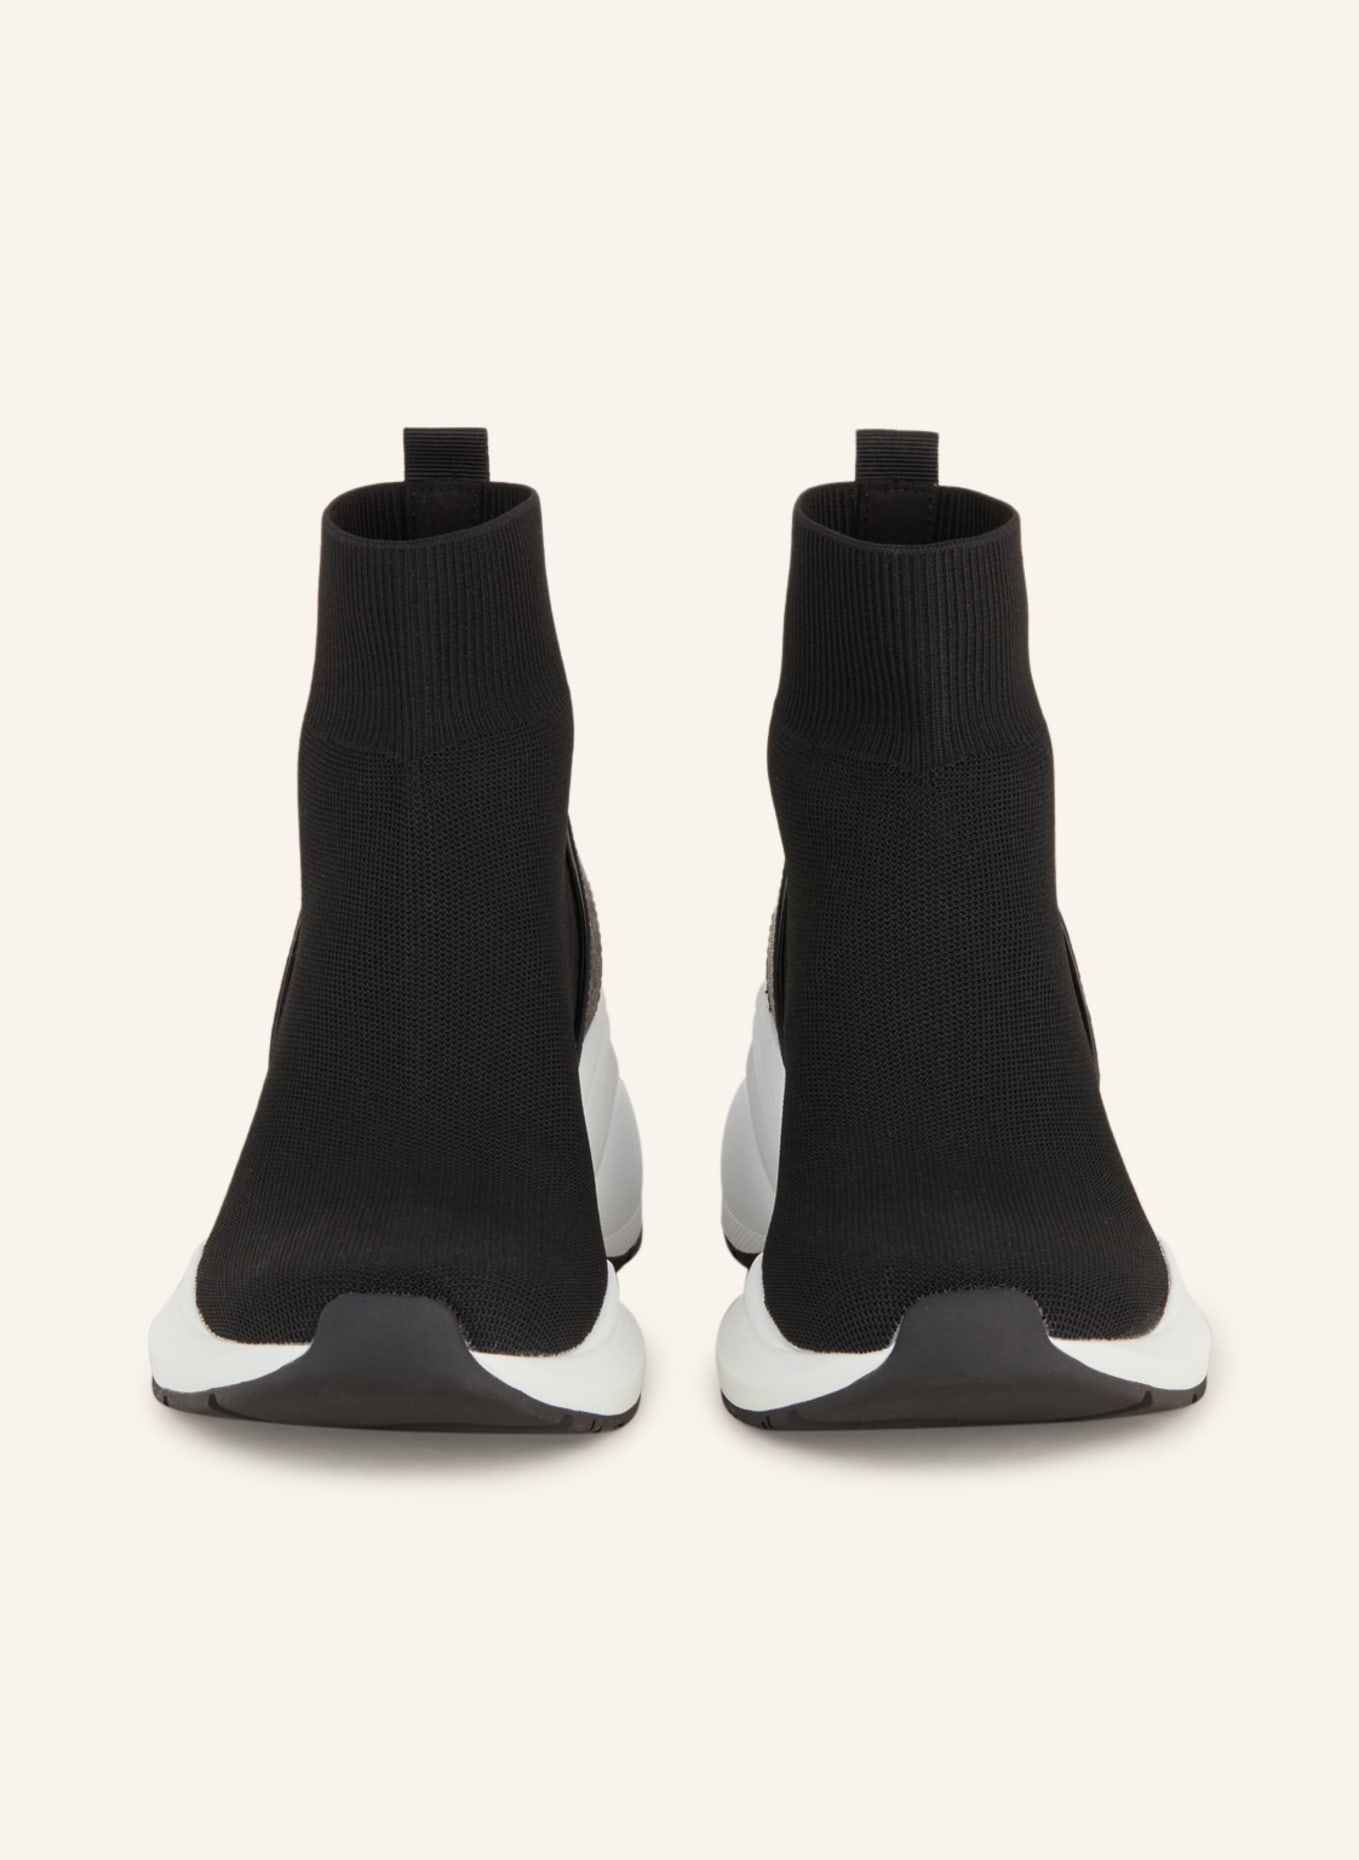 MICHAEL KORS Hightop-Sneaker, Farbe: 001 BLACK LEATHER (Bild 3)